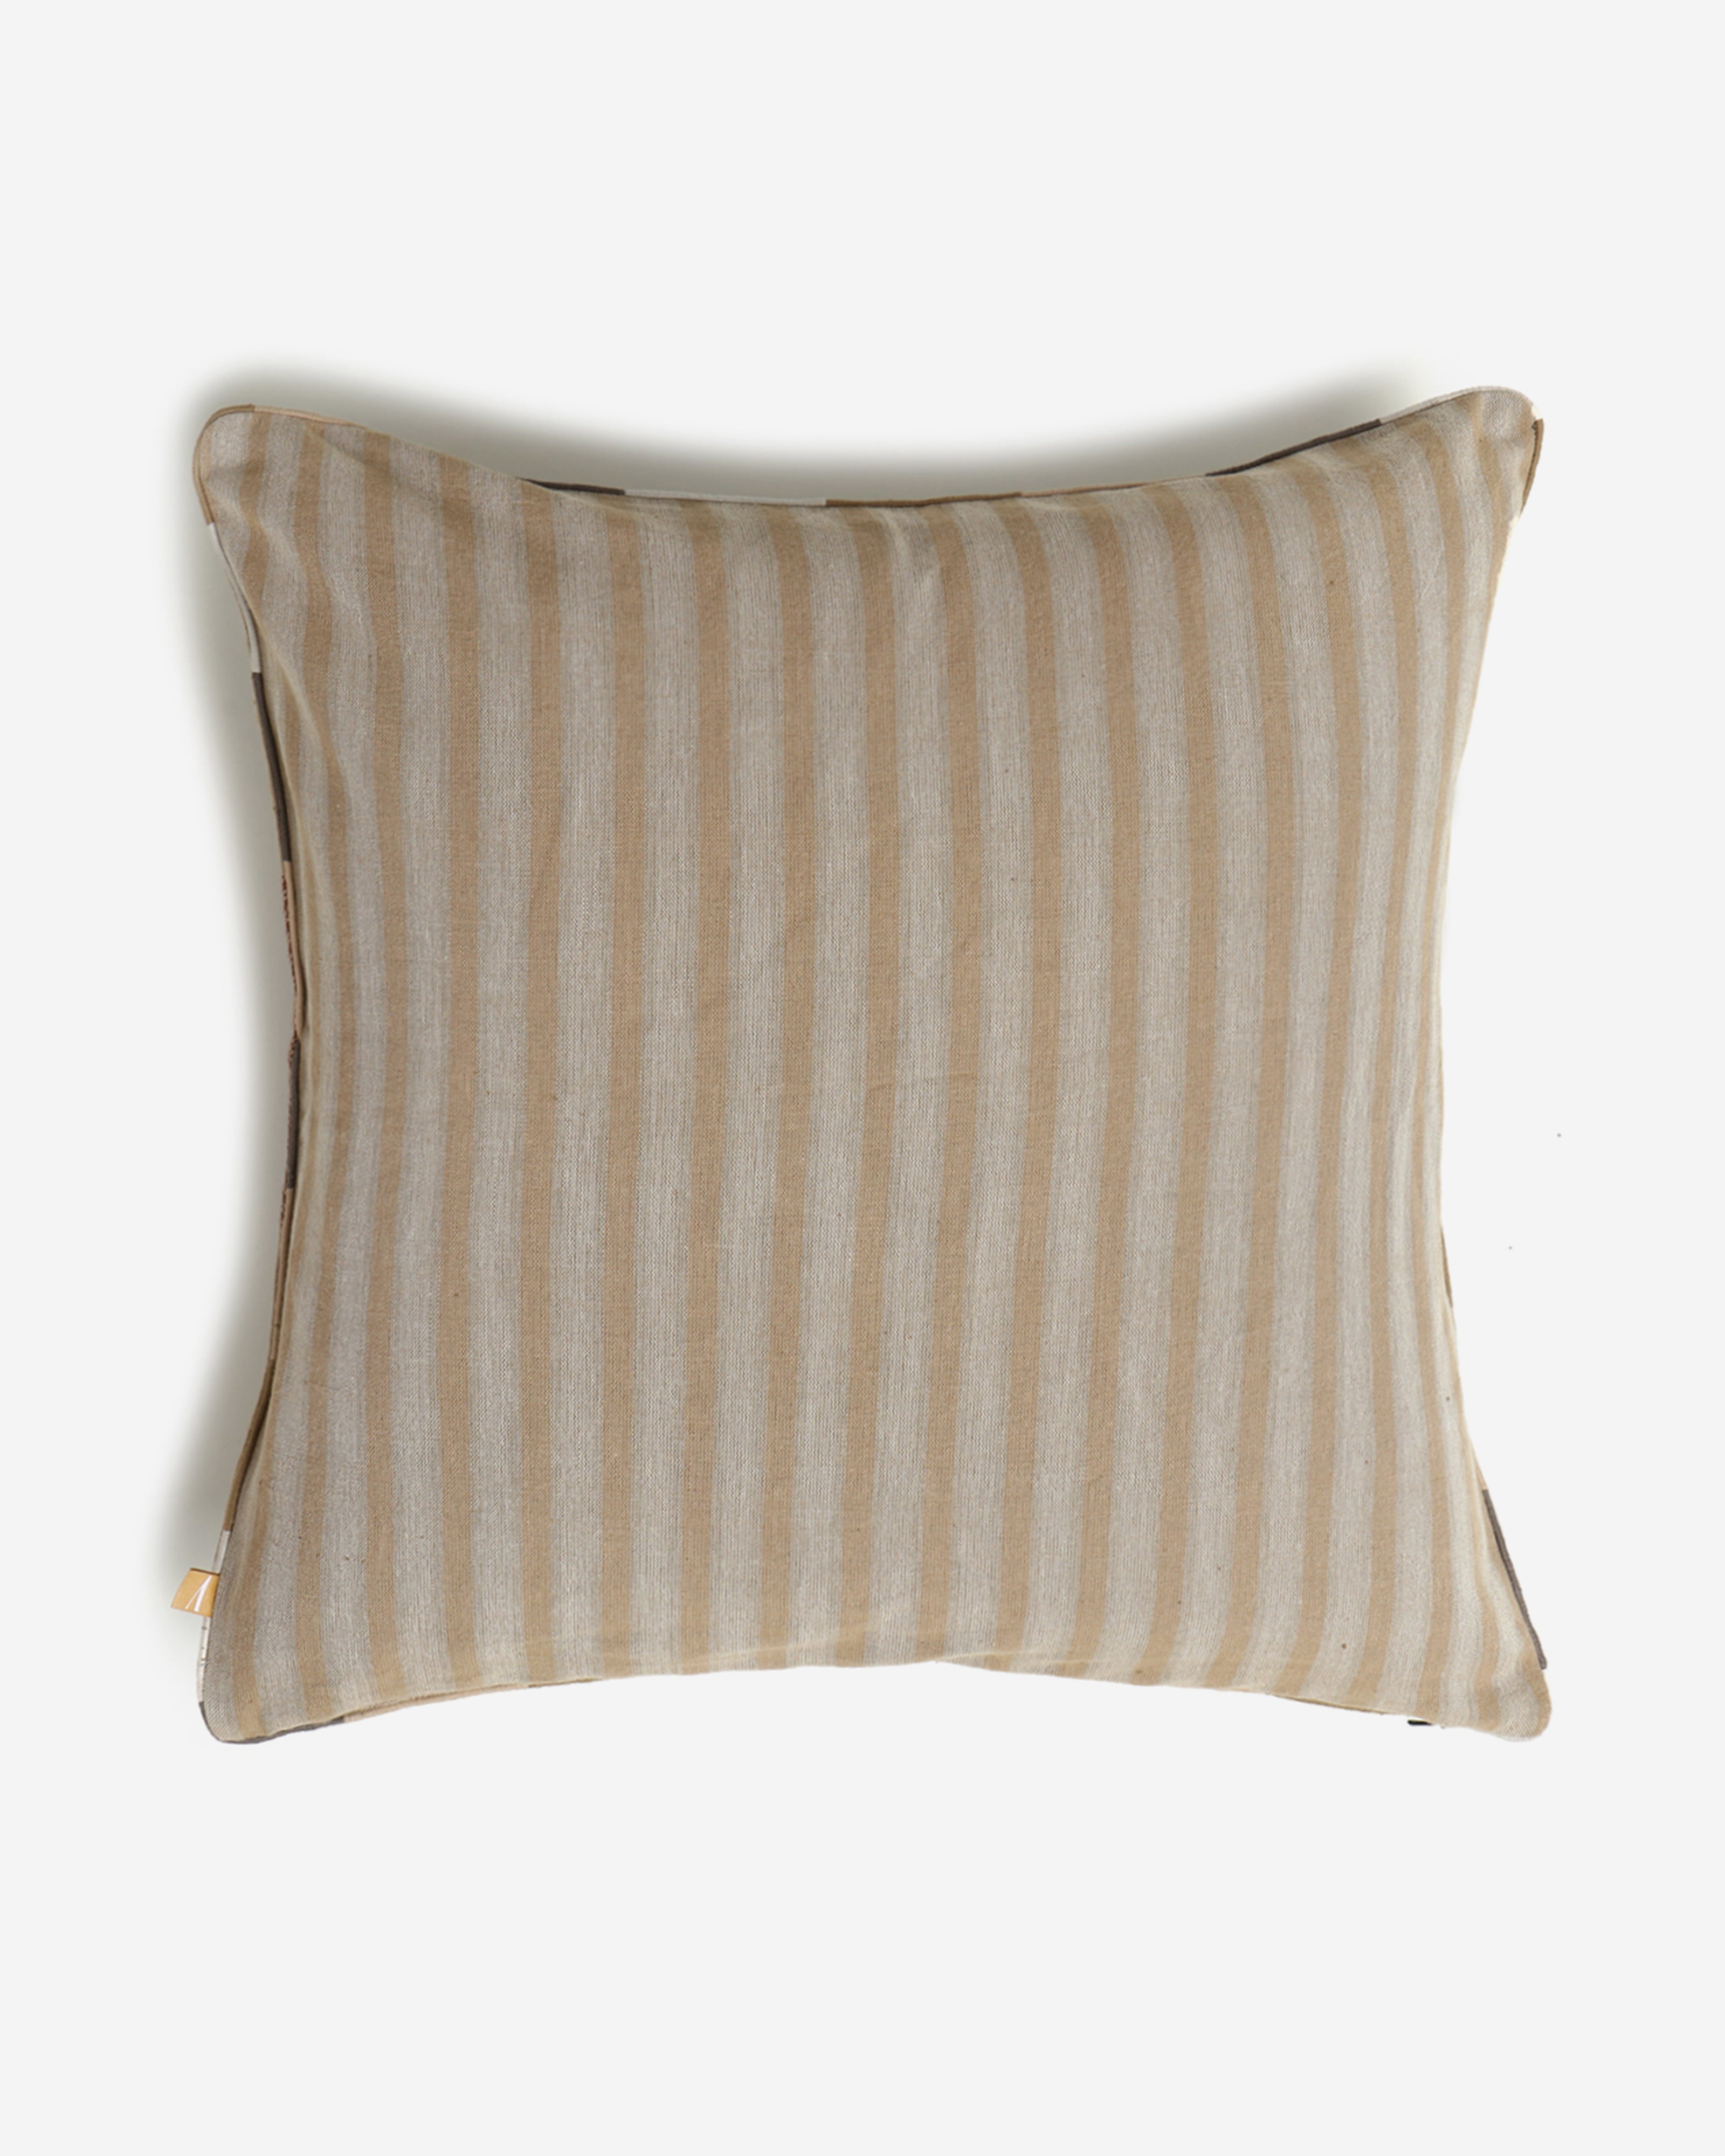 Muji Extra Weft Cotton Cushion Cover - Medium beige